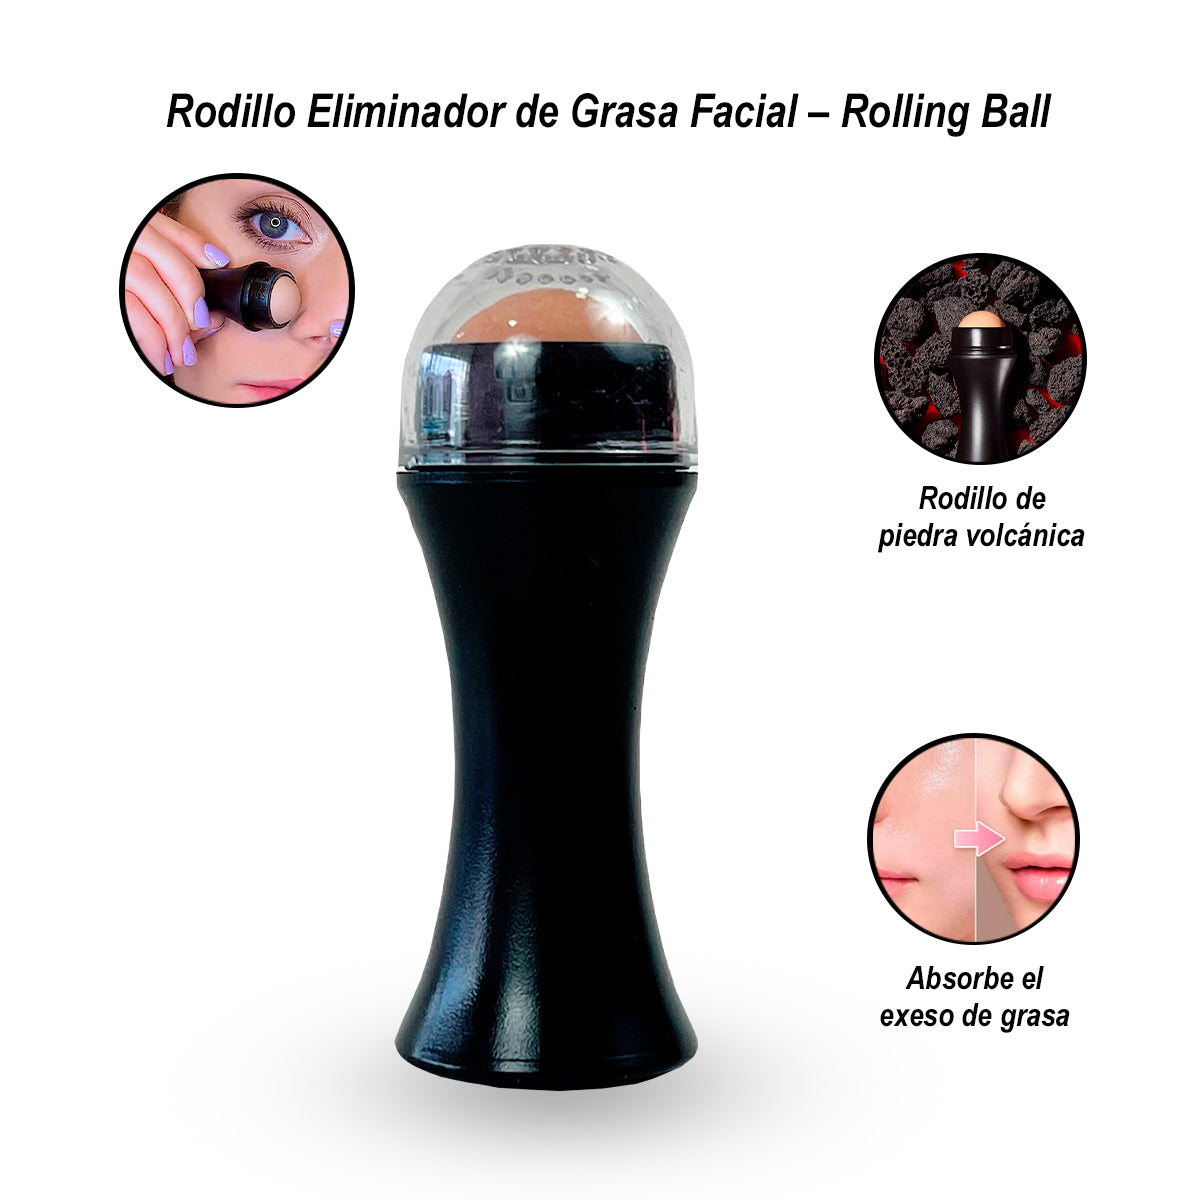 Rodillo Eliminador de Grasa Facial - Rolling Ball Multicolor